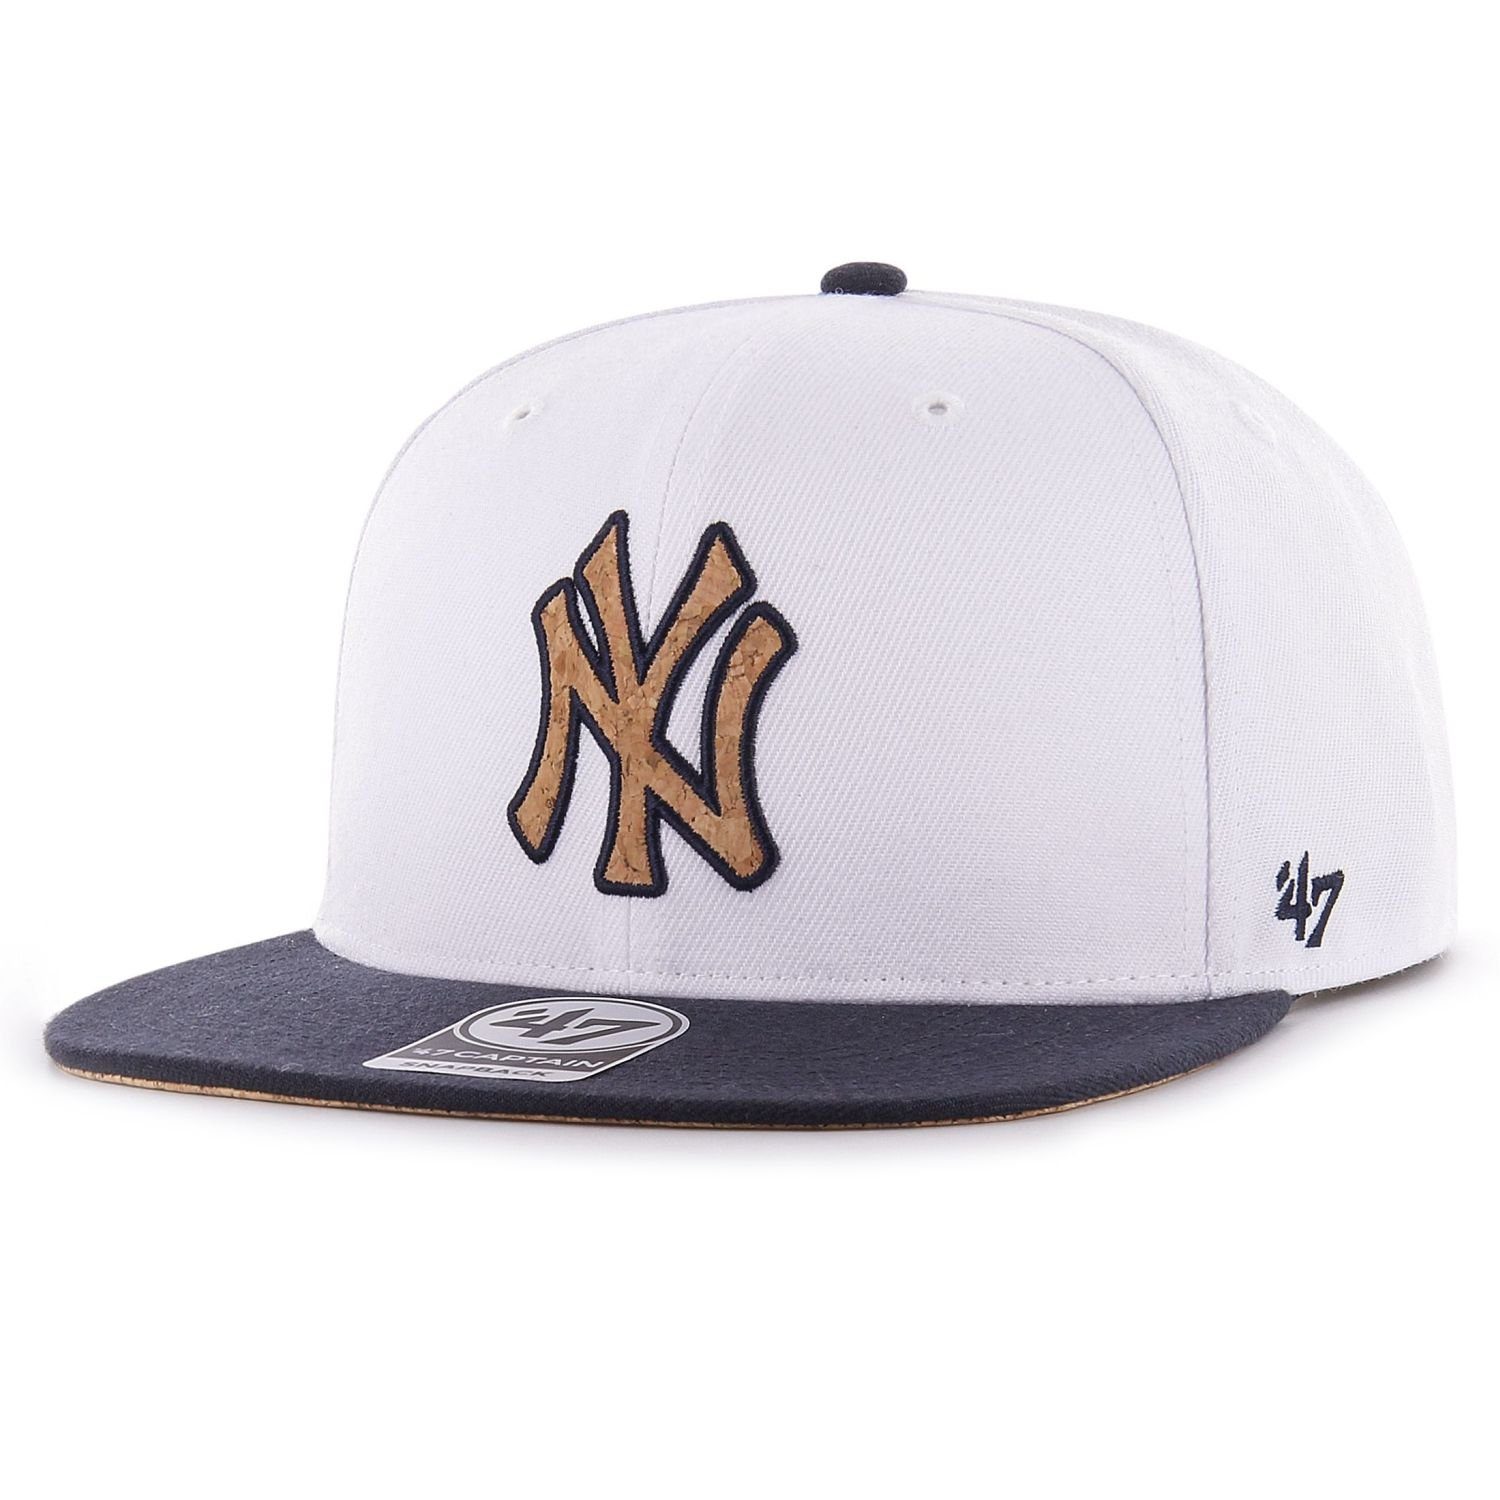 x27;47 Brand Snapback Cap Captain Yankees New York CORKSCREW